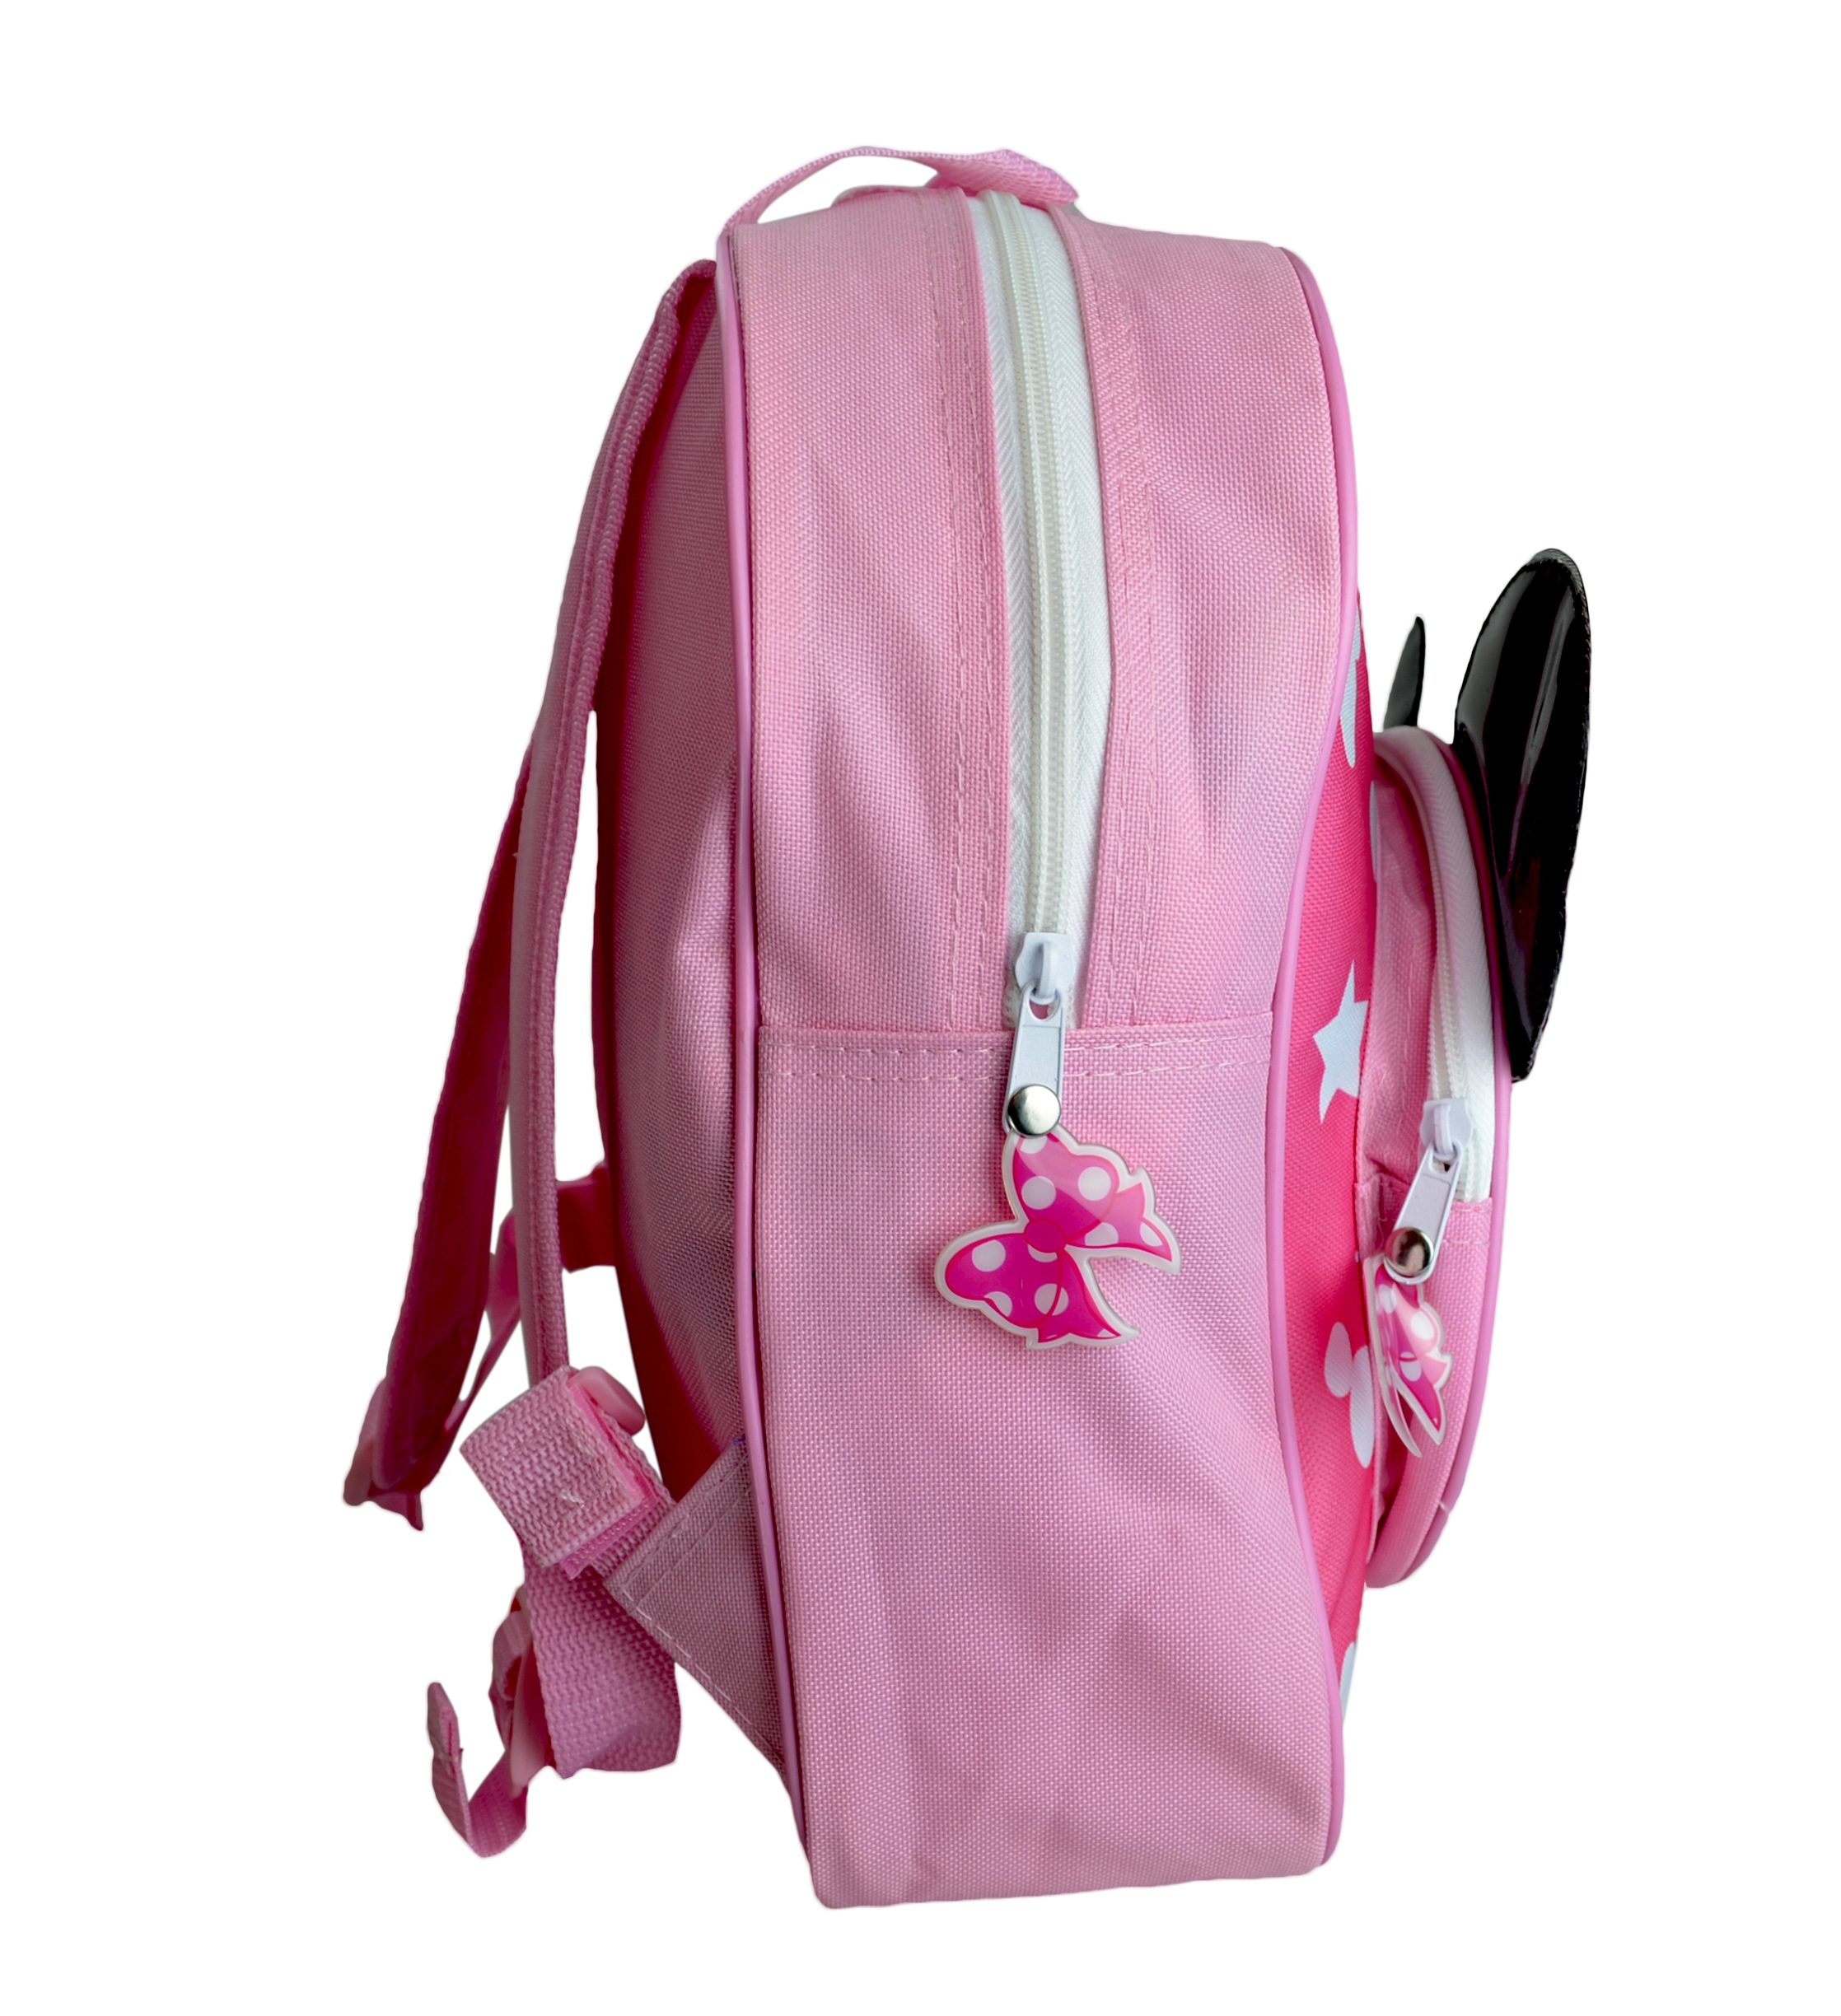 Disney Minnie Mouse Pink Polka Dot Bow School Bag Rucksack Backpack